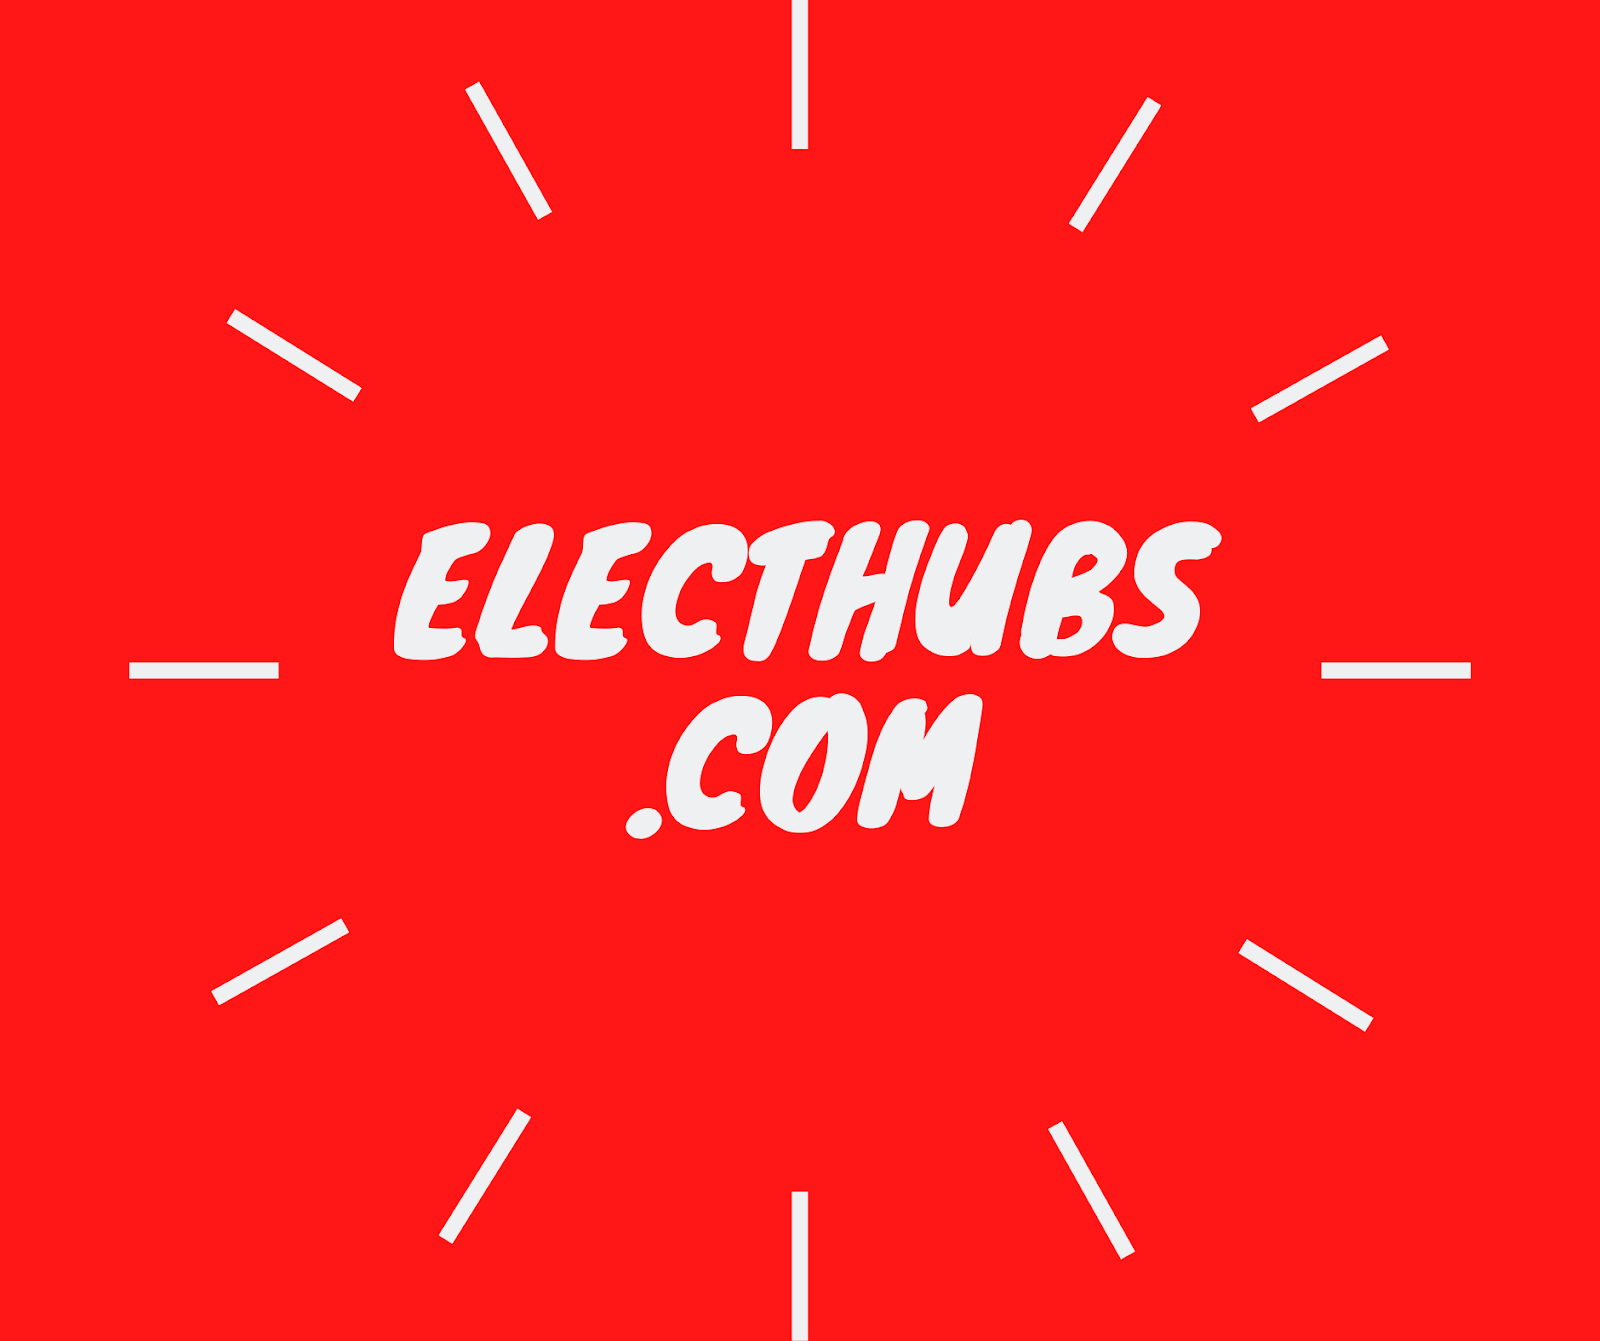 electhubs.com 電子集合城